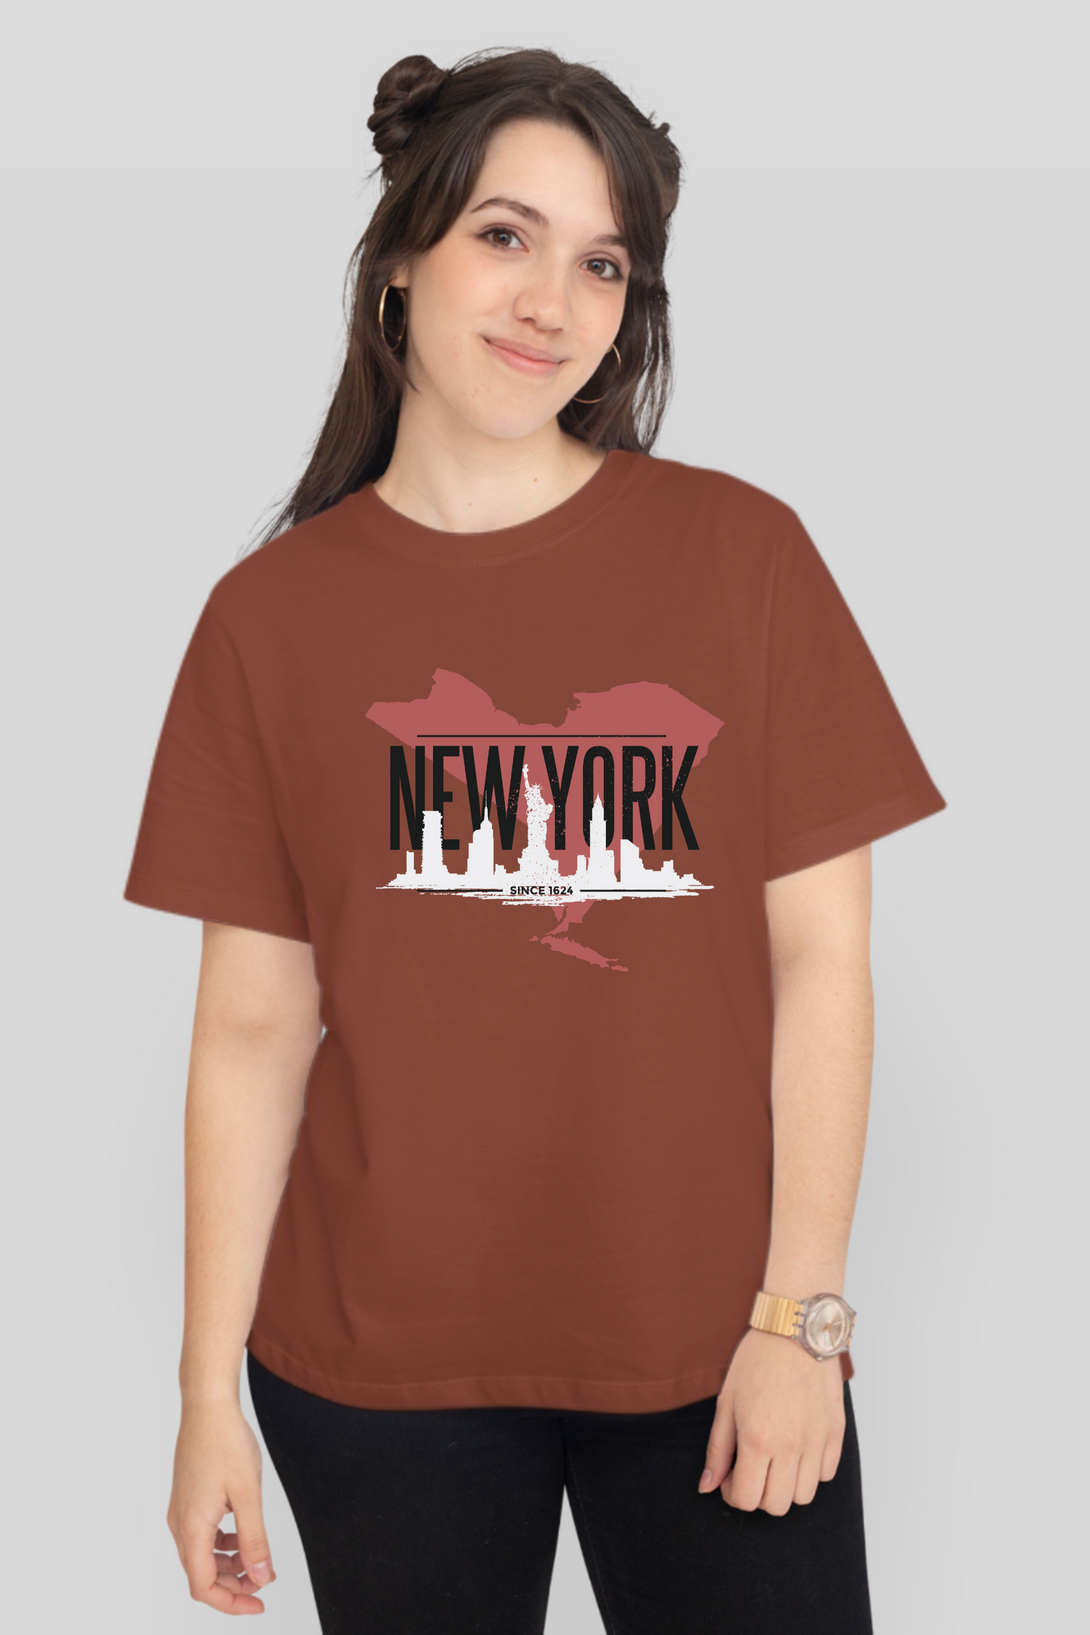 Nyc Skyline Printed T-Shirt For Women - WowWaves - 6